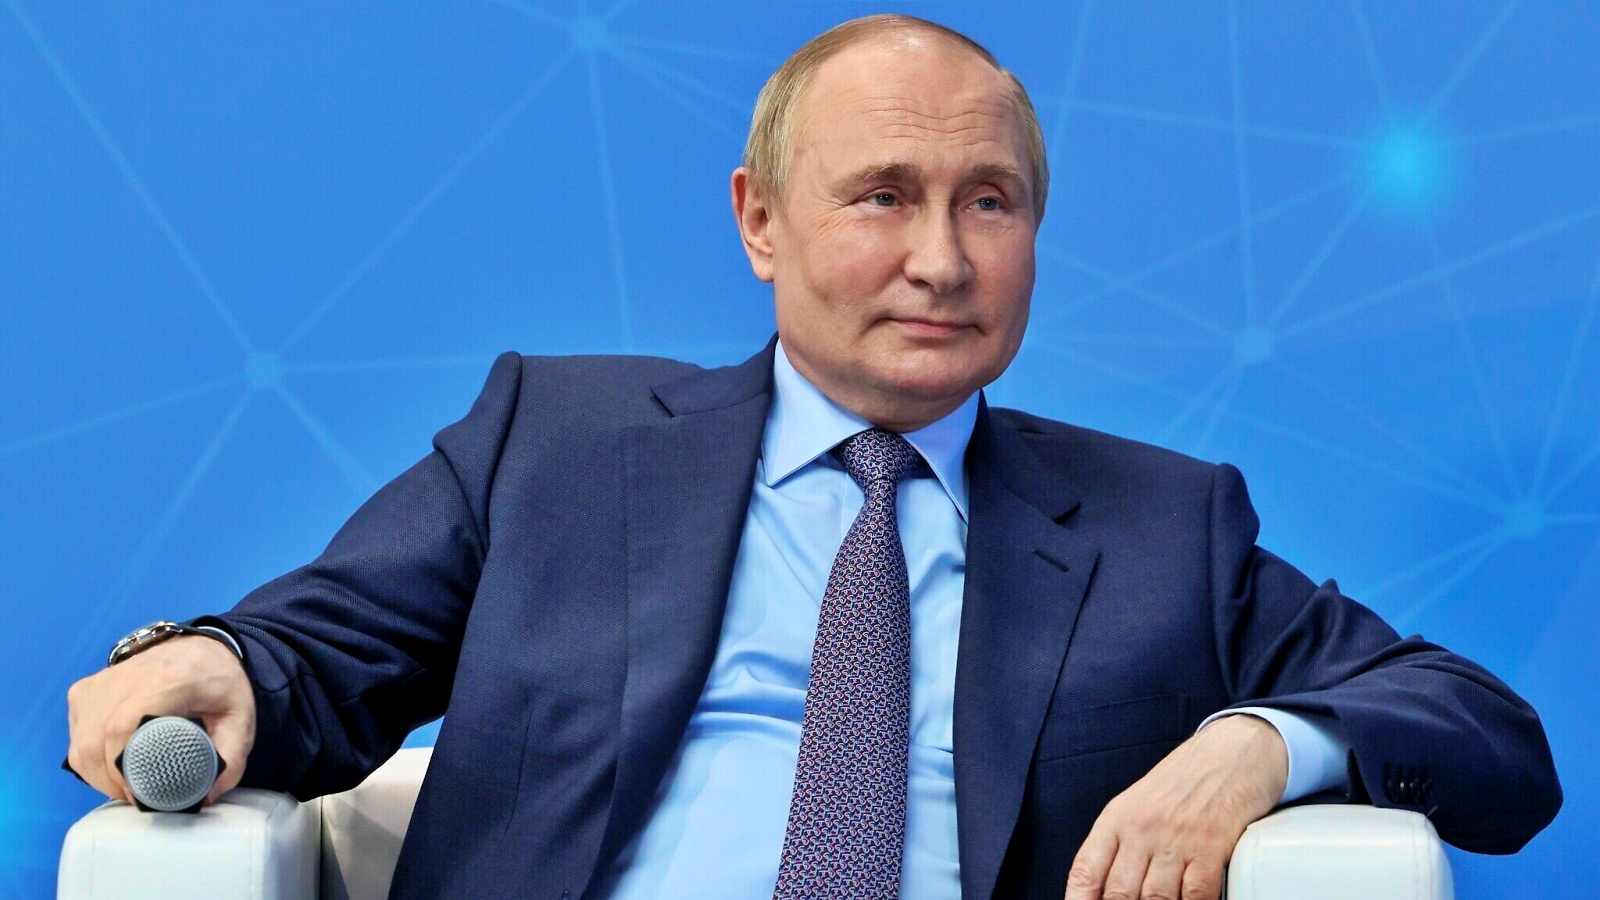 Prima visita ufficiale di Vladimir Putin durante la guerra in Ucraina